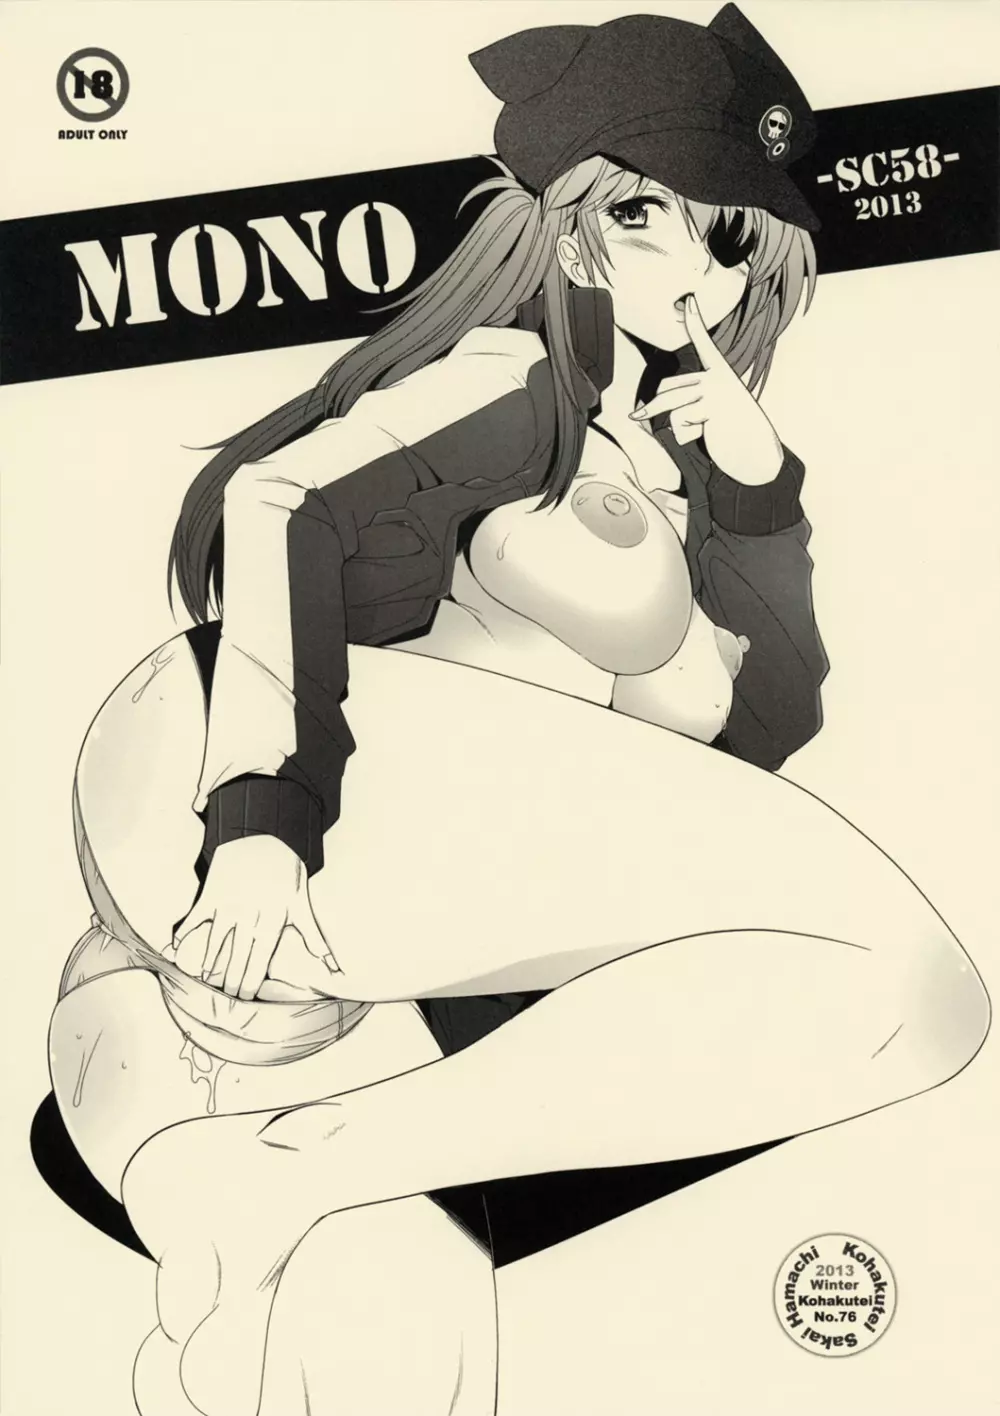 MONO -SC58-